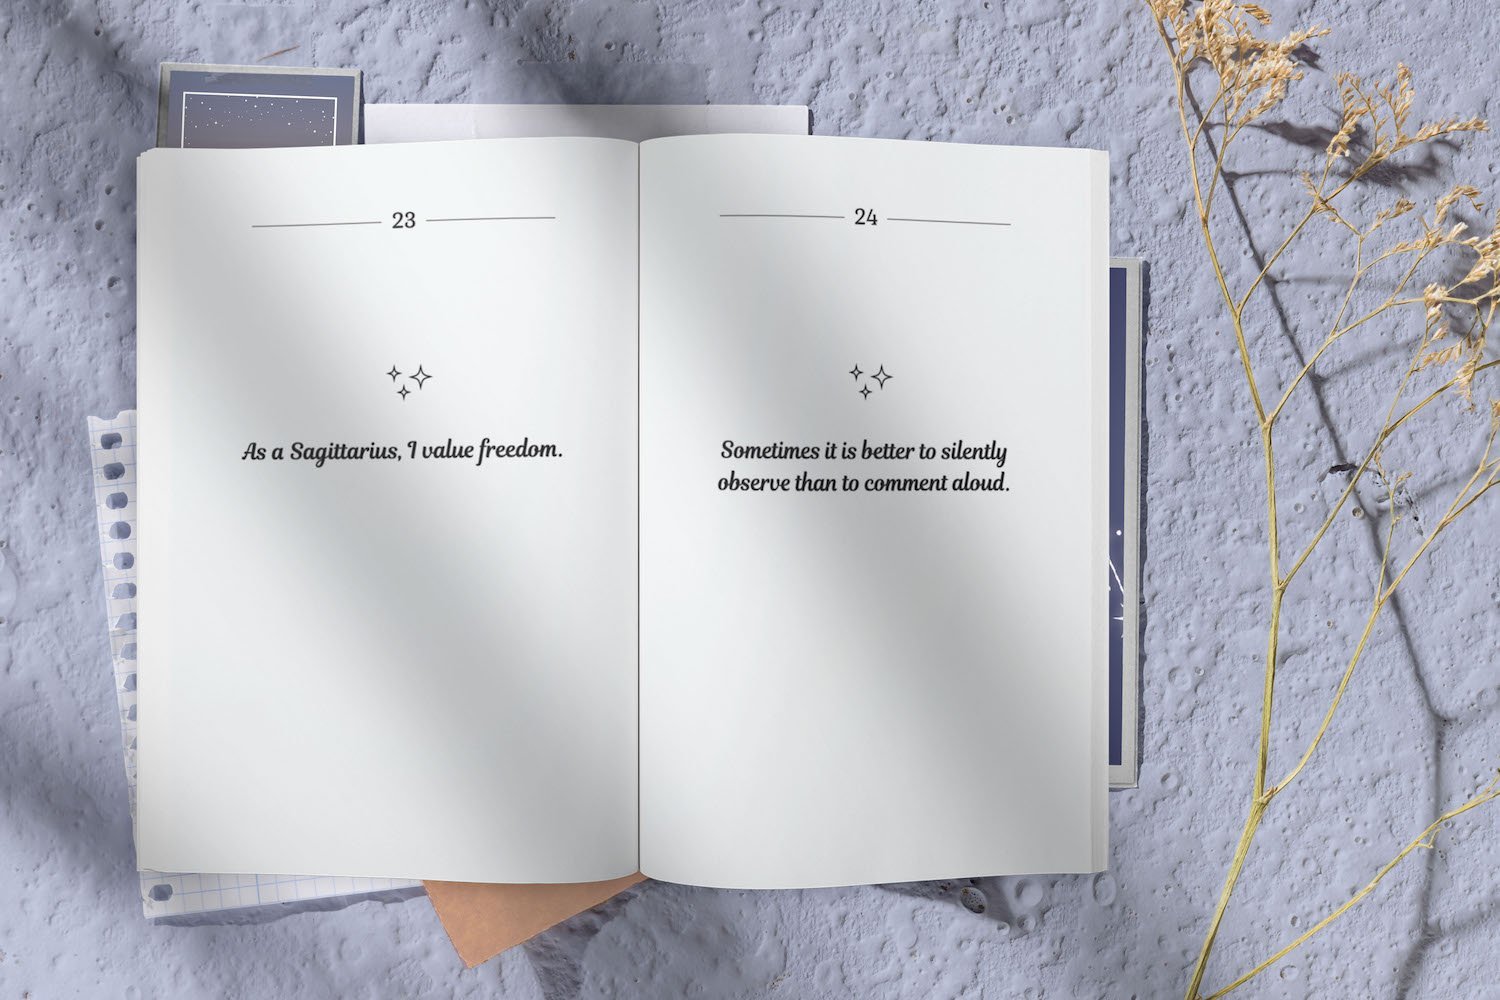 Sagittarius Affirmation Handbook - Affirmicious